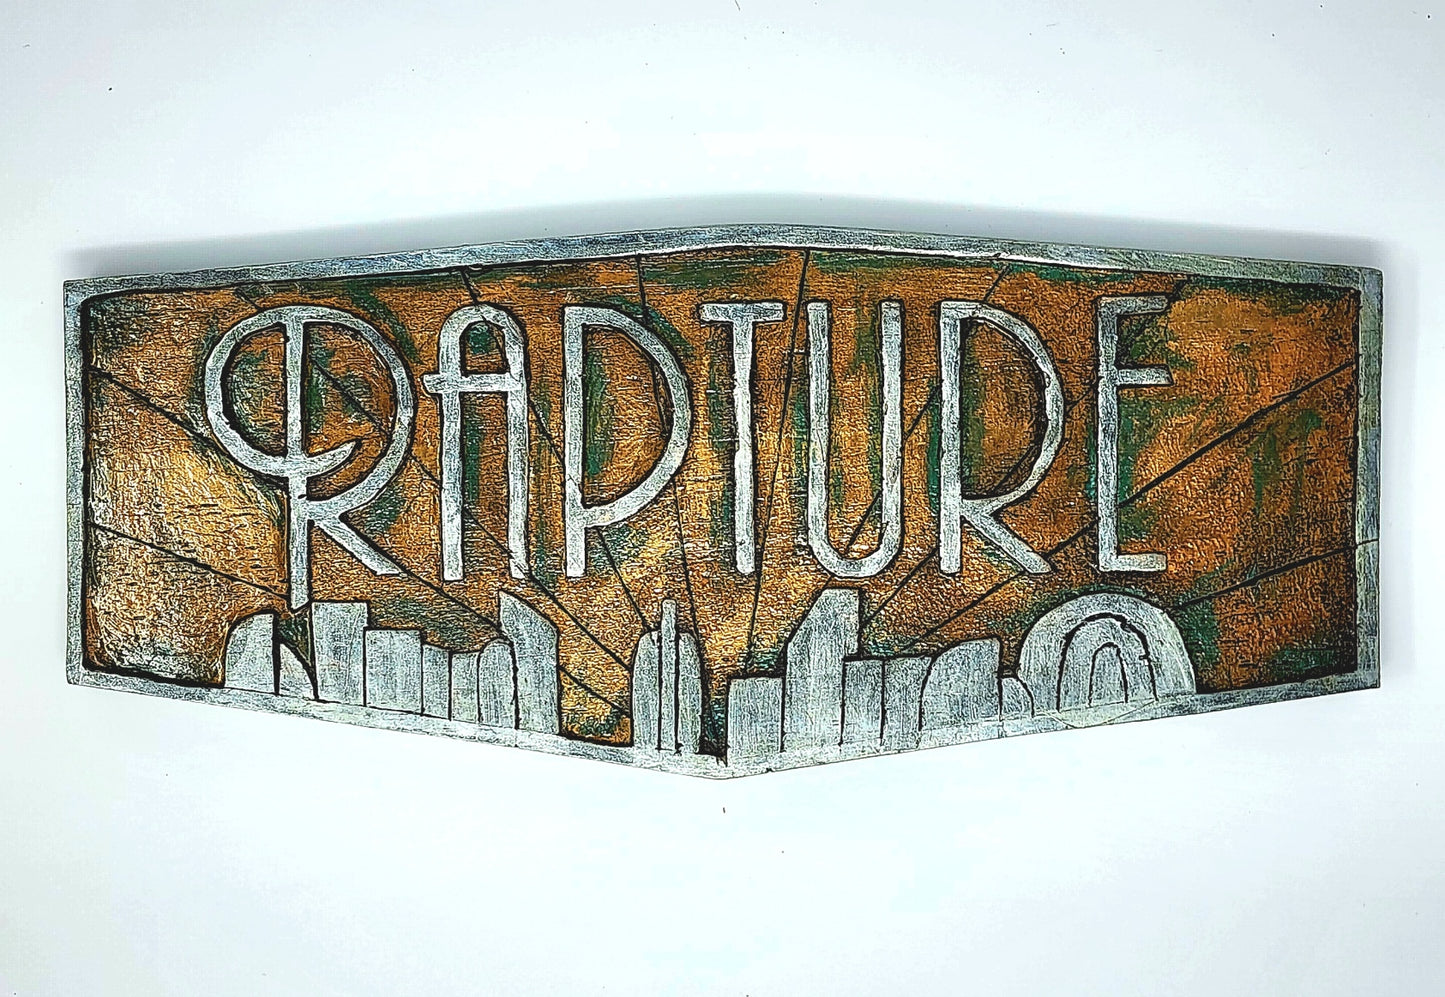 Rapture Sign